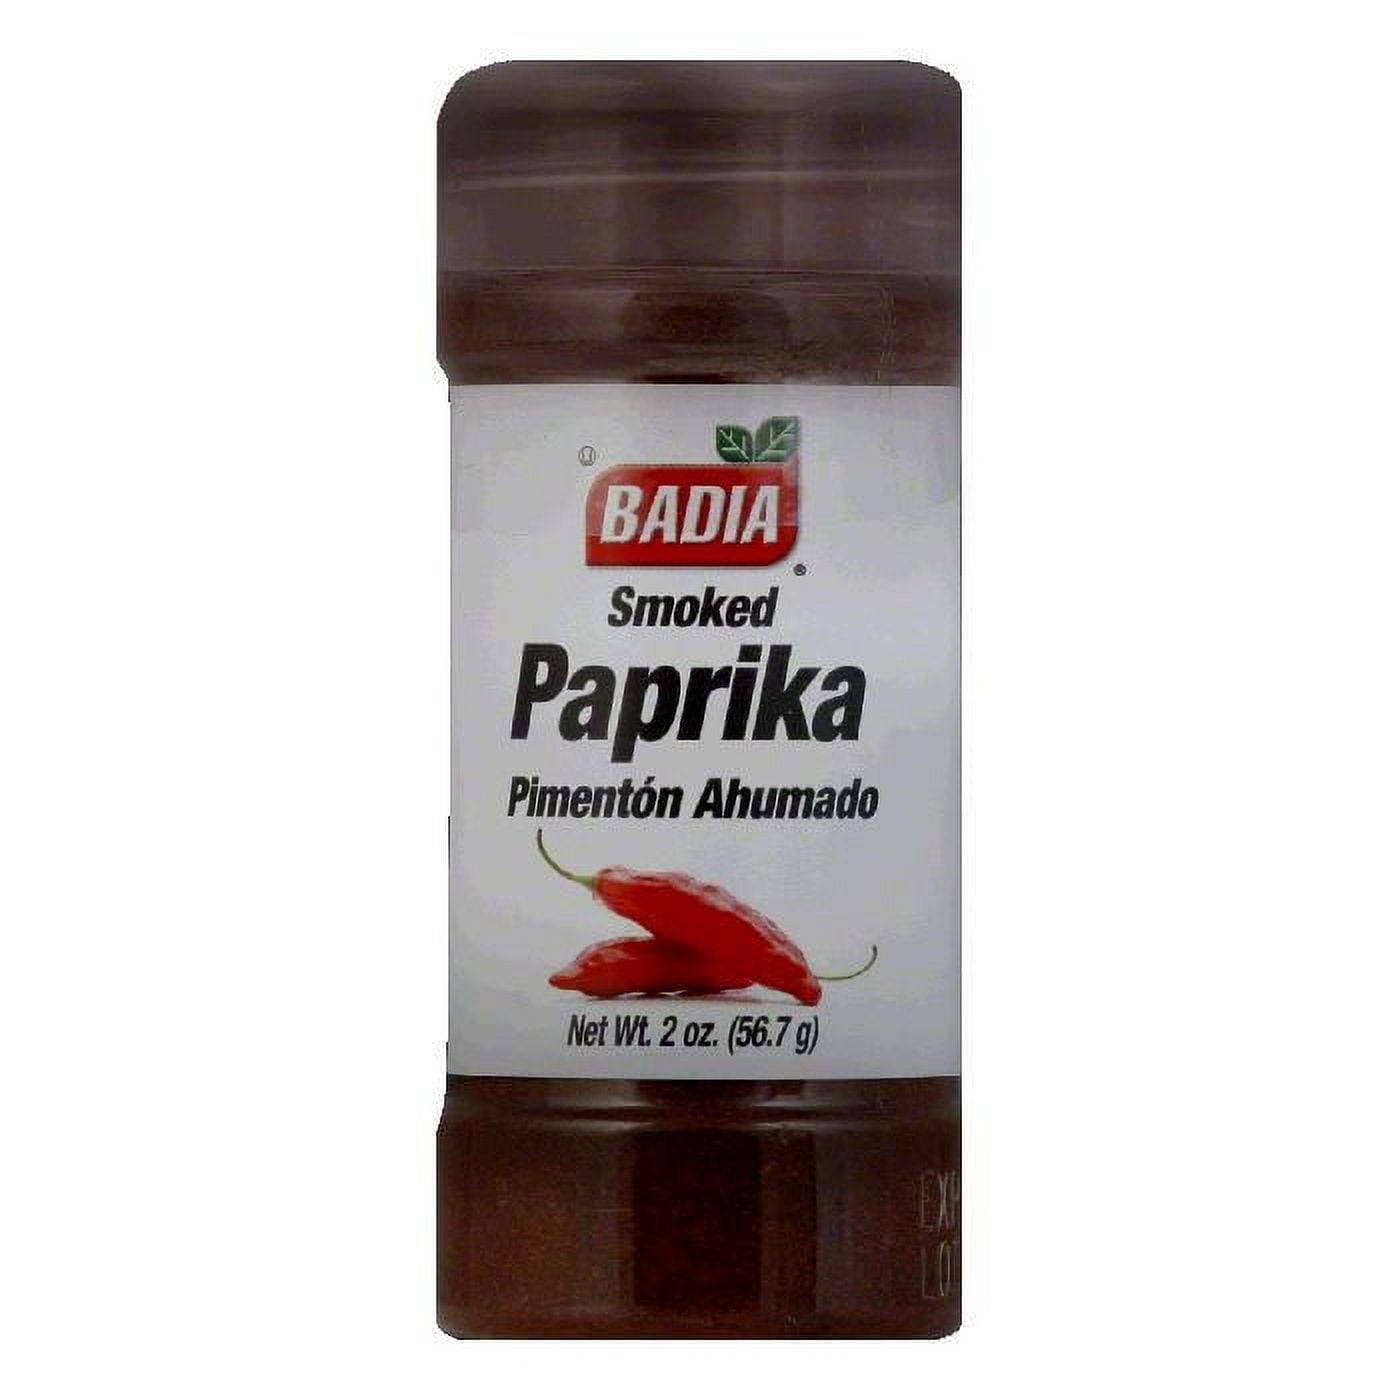 Badia Smoked Paprika 2 oz Shaker